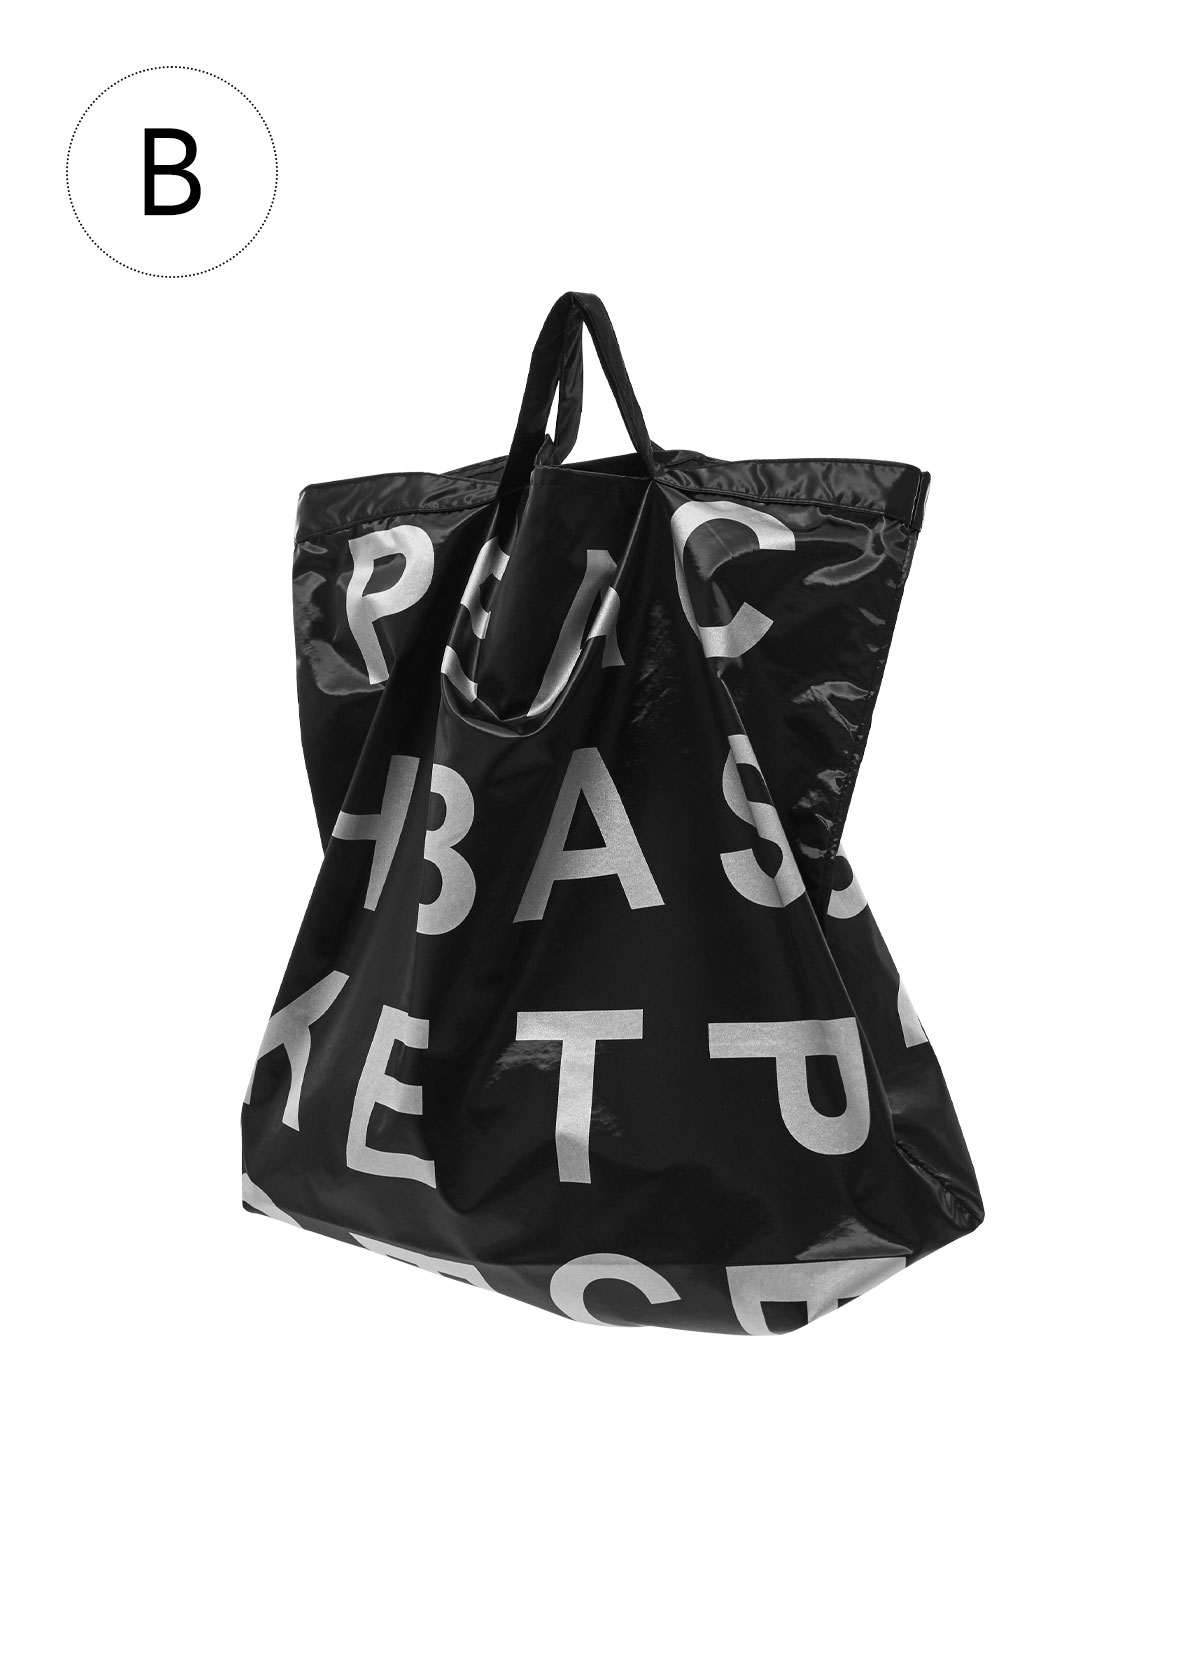 Ⓑ p.b satin bag (black)